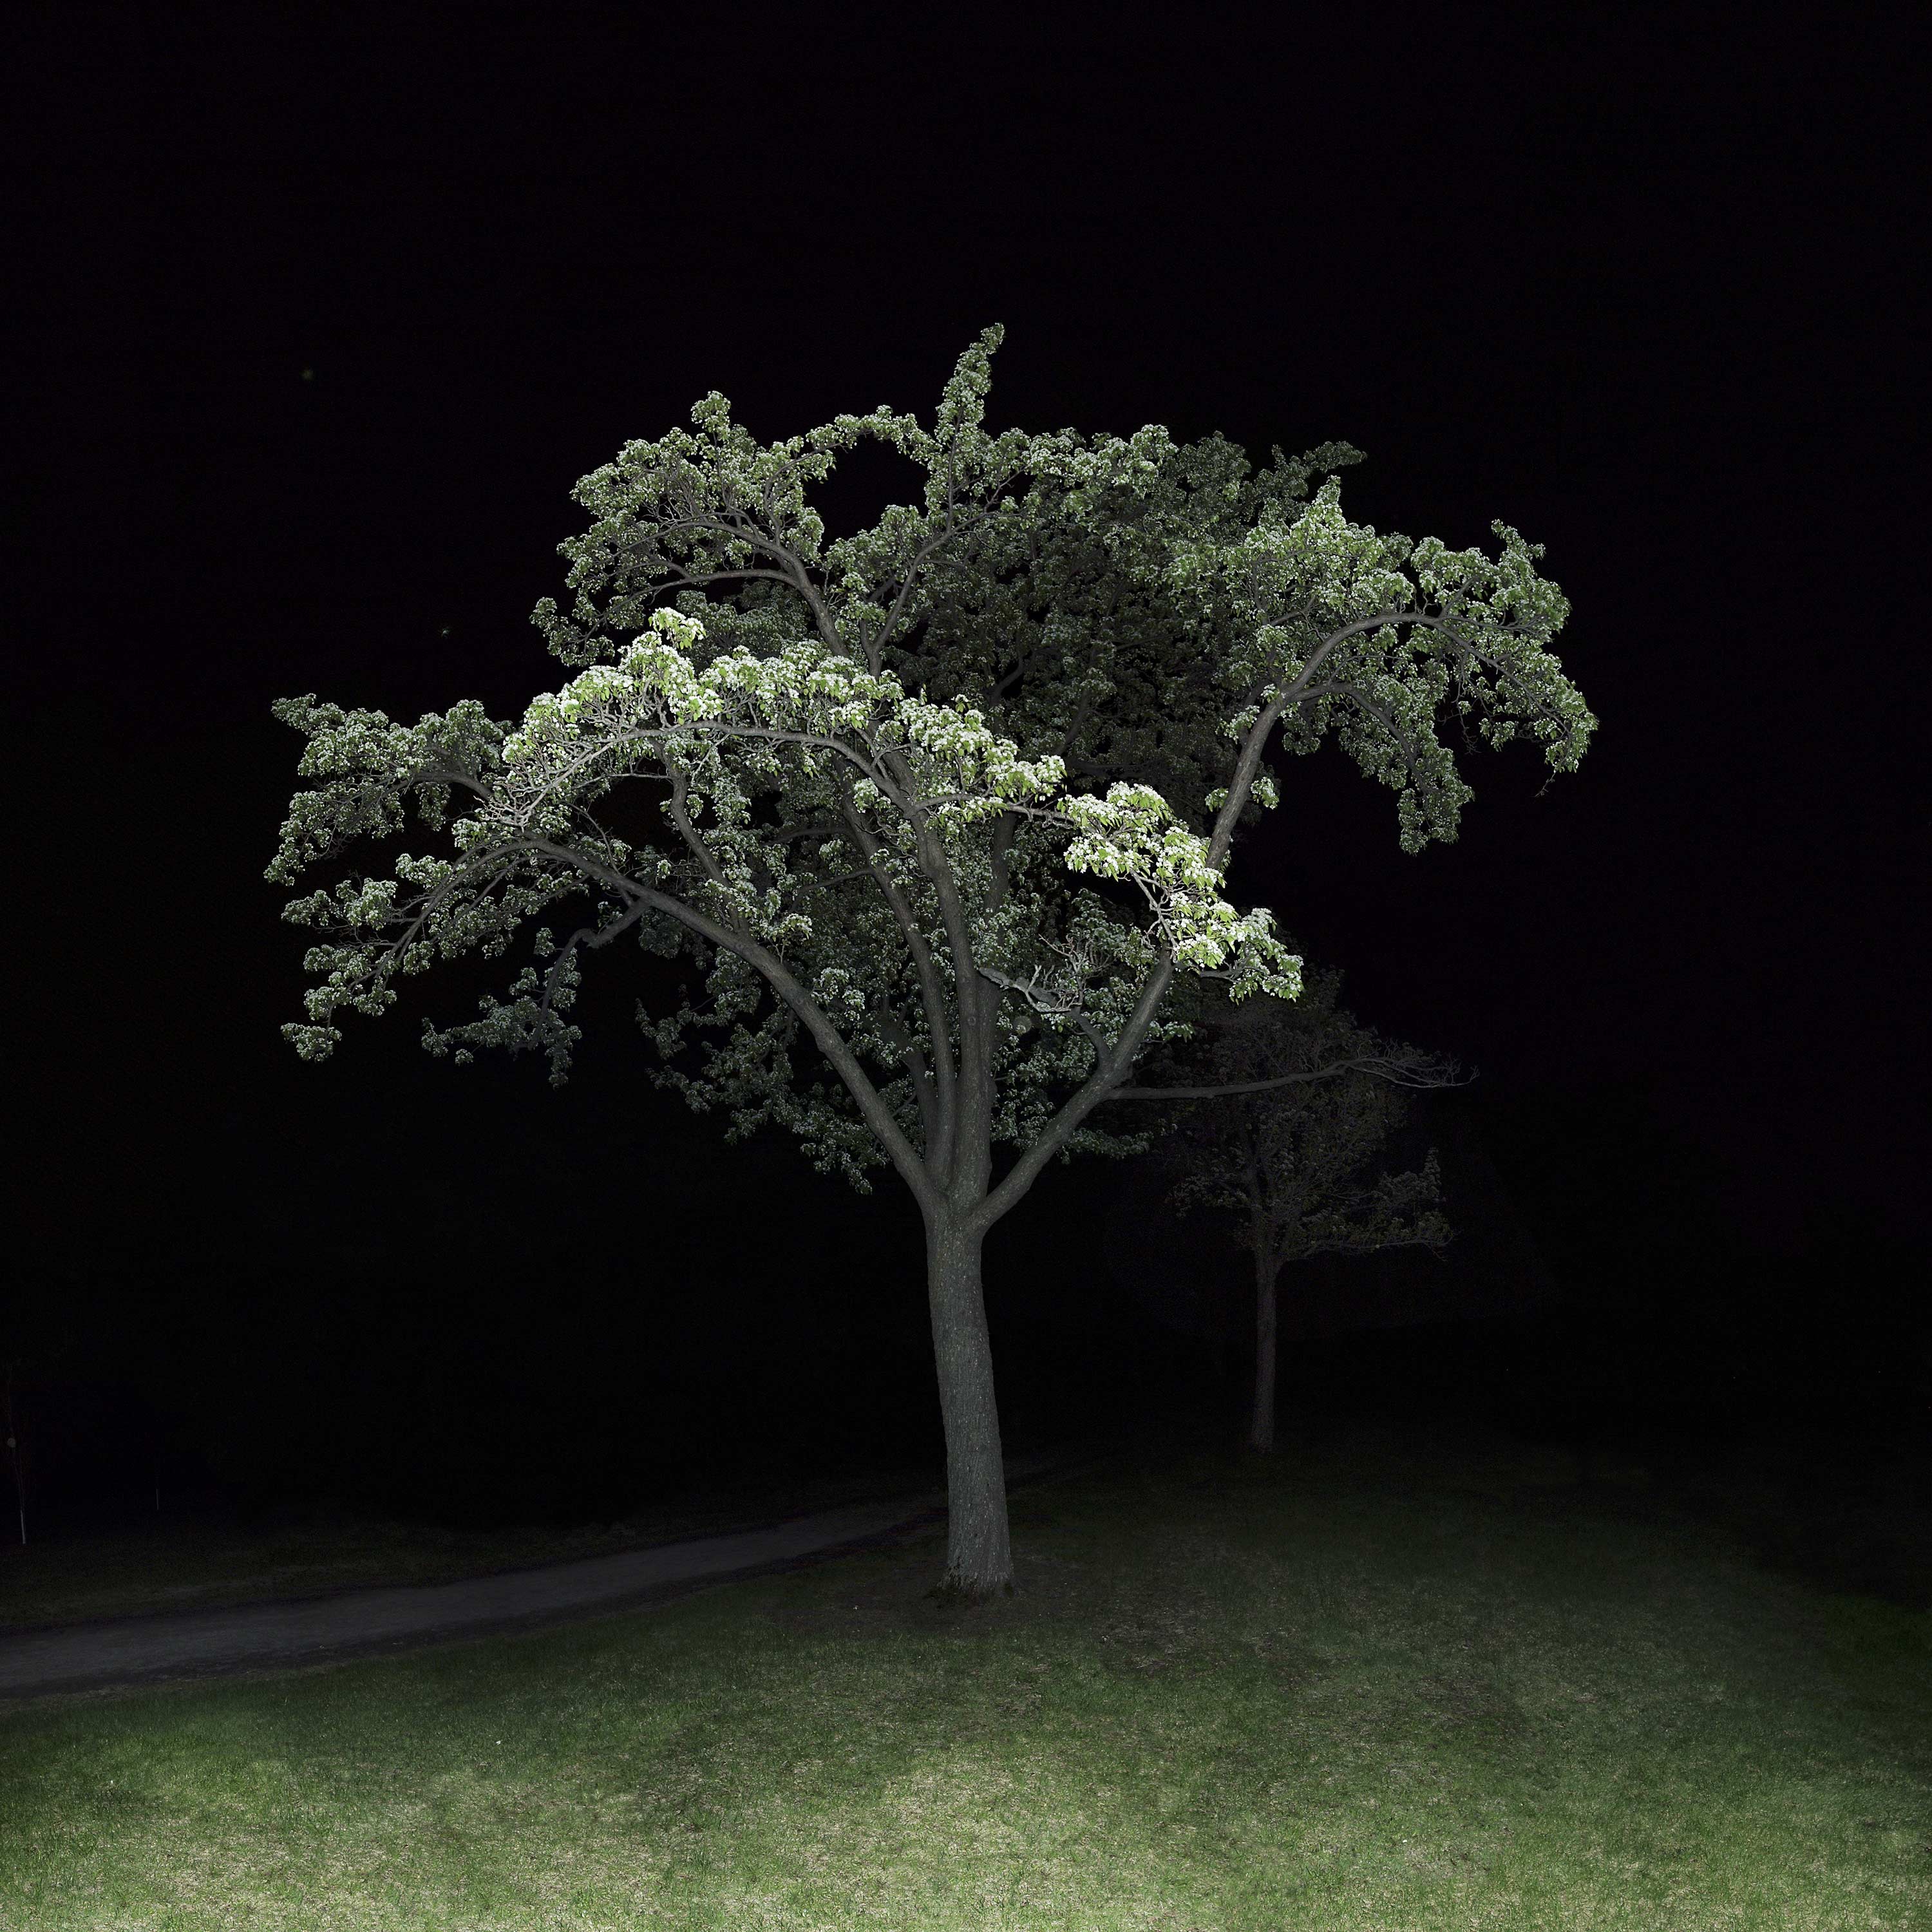 jocelyn philibert Des arbres dans la nuit<br />Trees in the Night